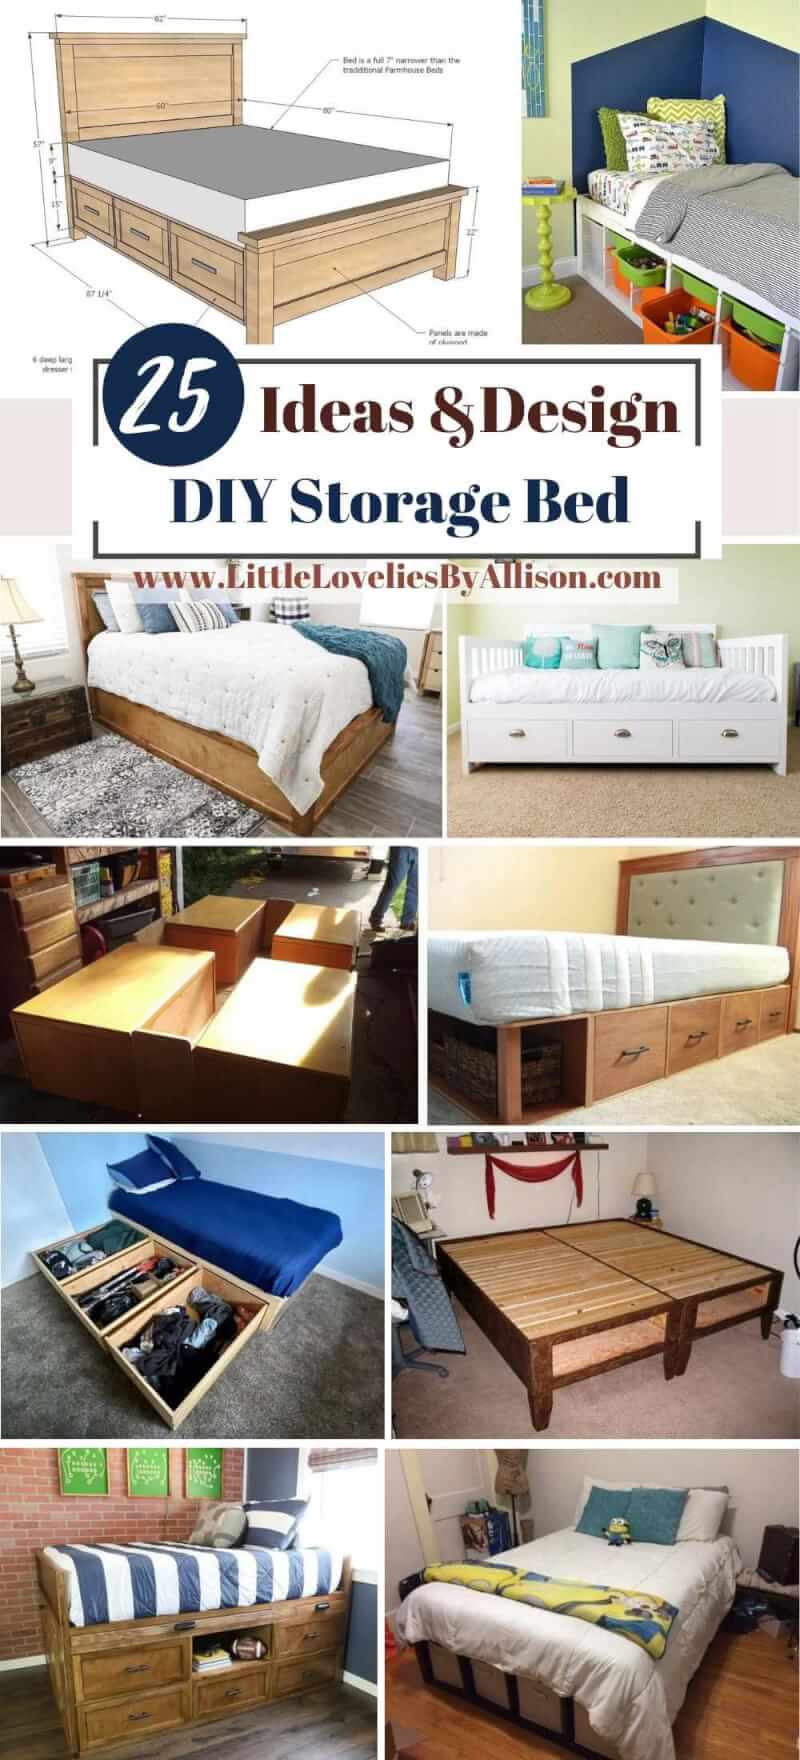 25 DIY Storage Bed Ideas_ How To Build Storage Bed